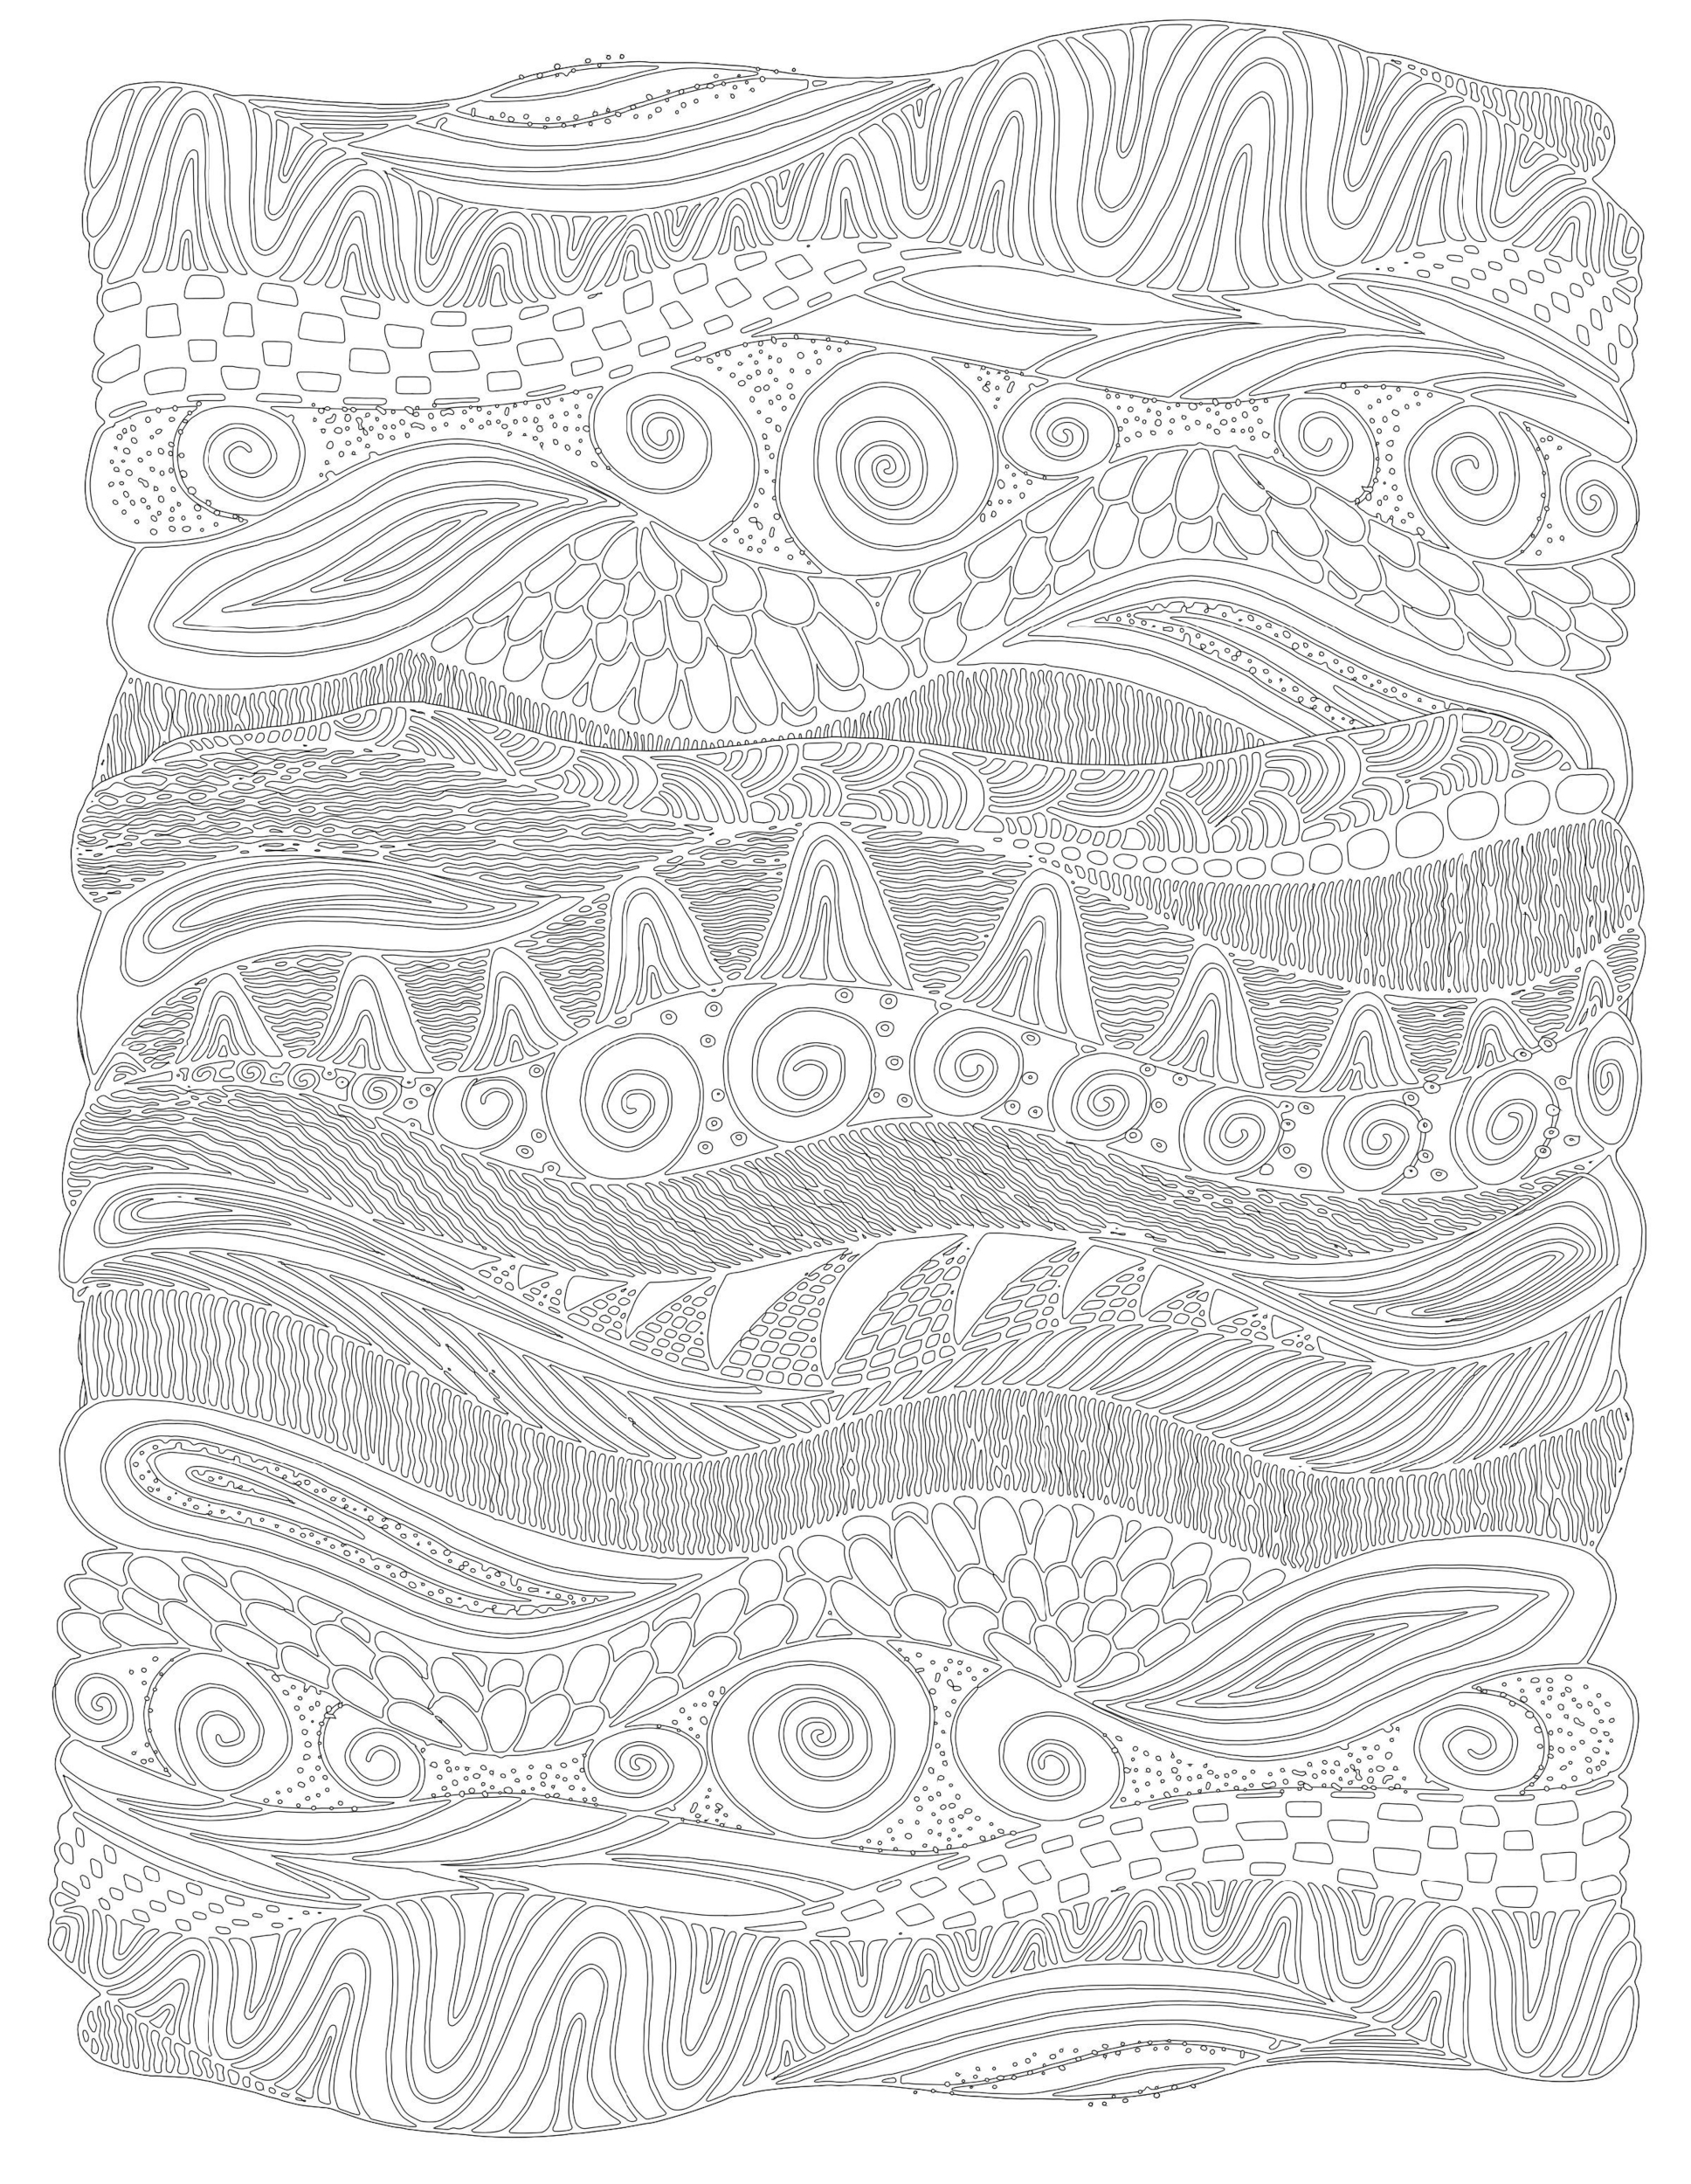 Раскраска Дудл океан узор из чешуи